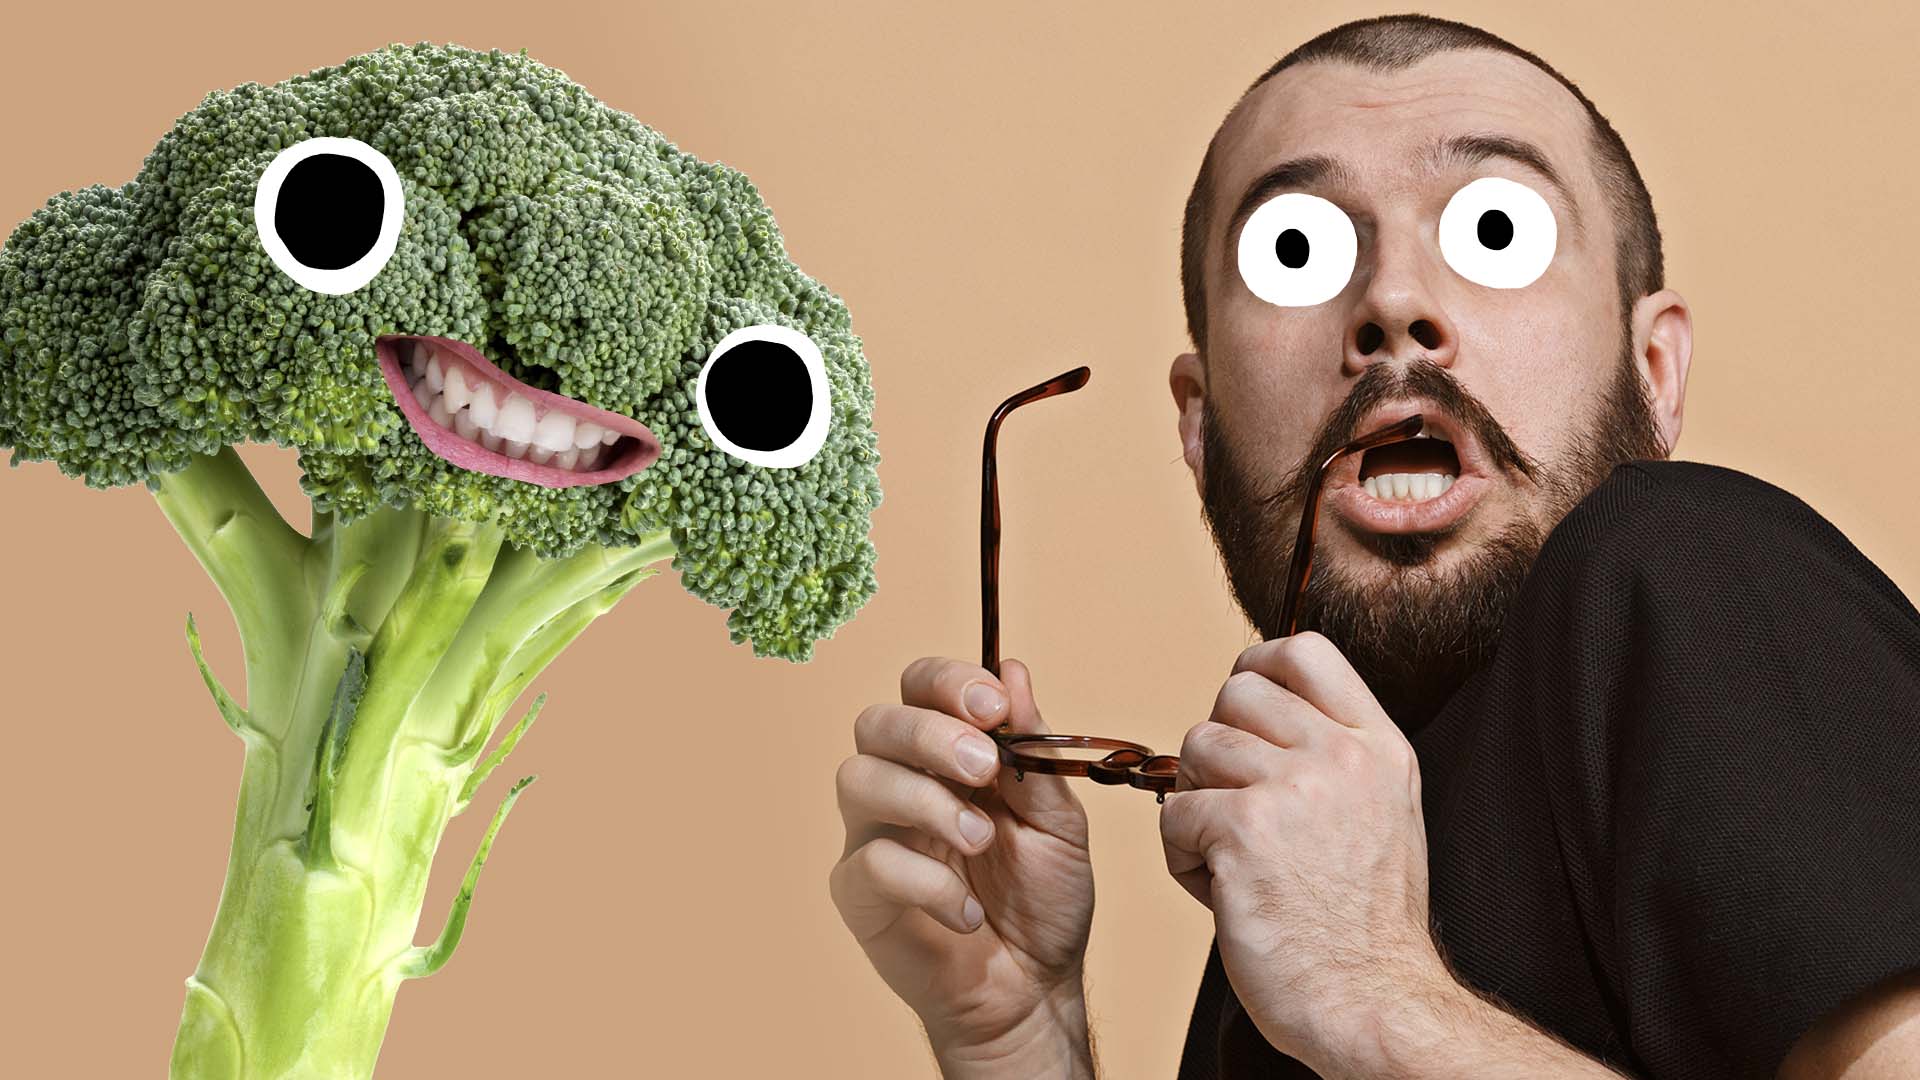 A man petrified by a portion of broccoli